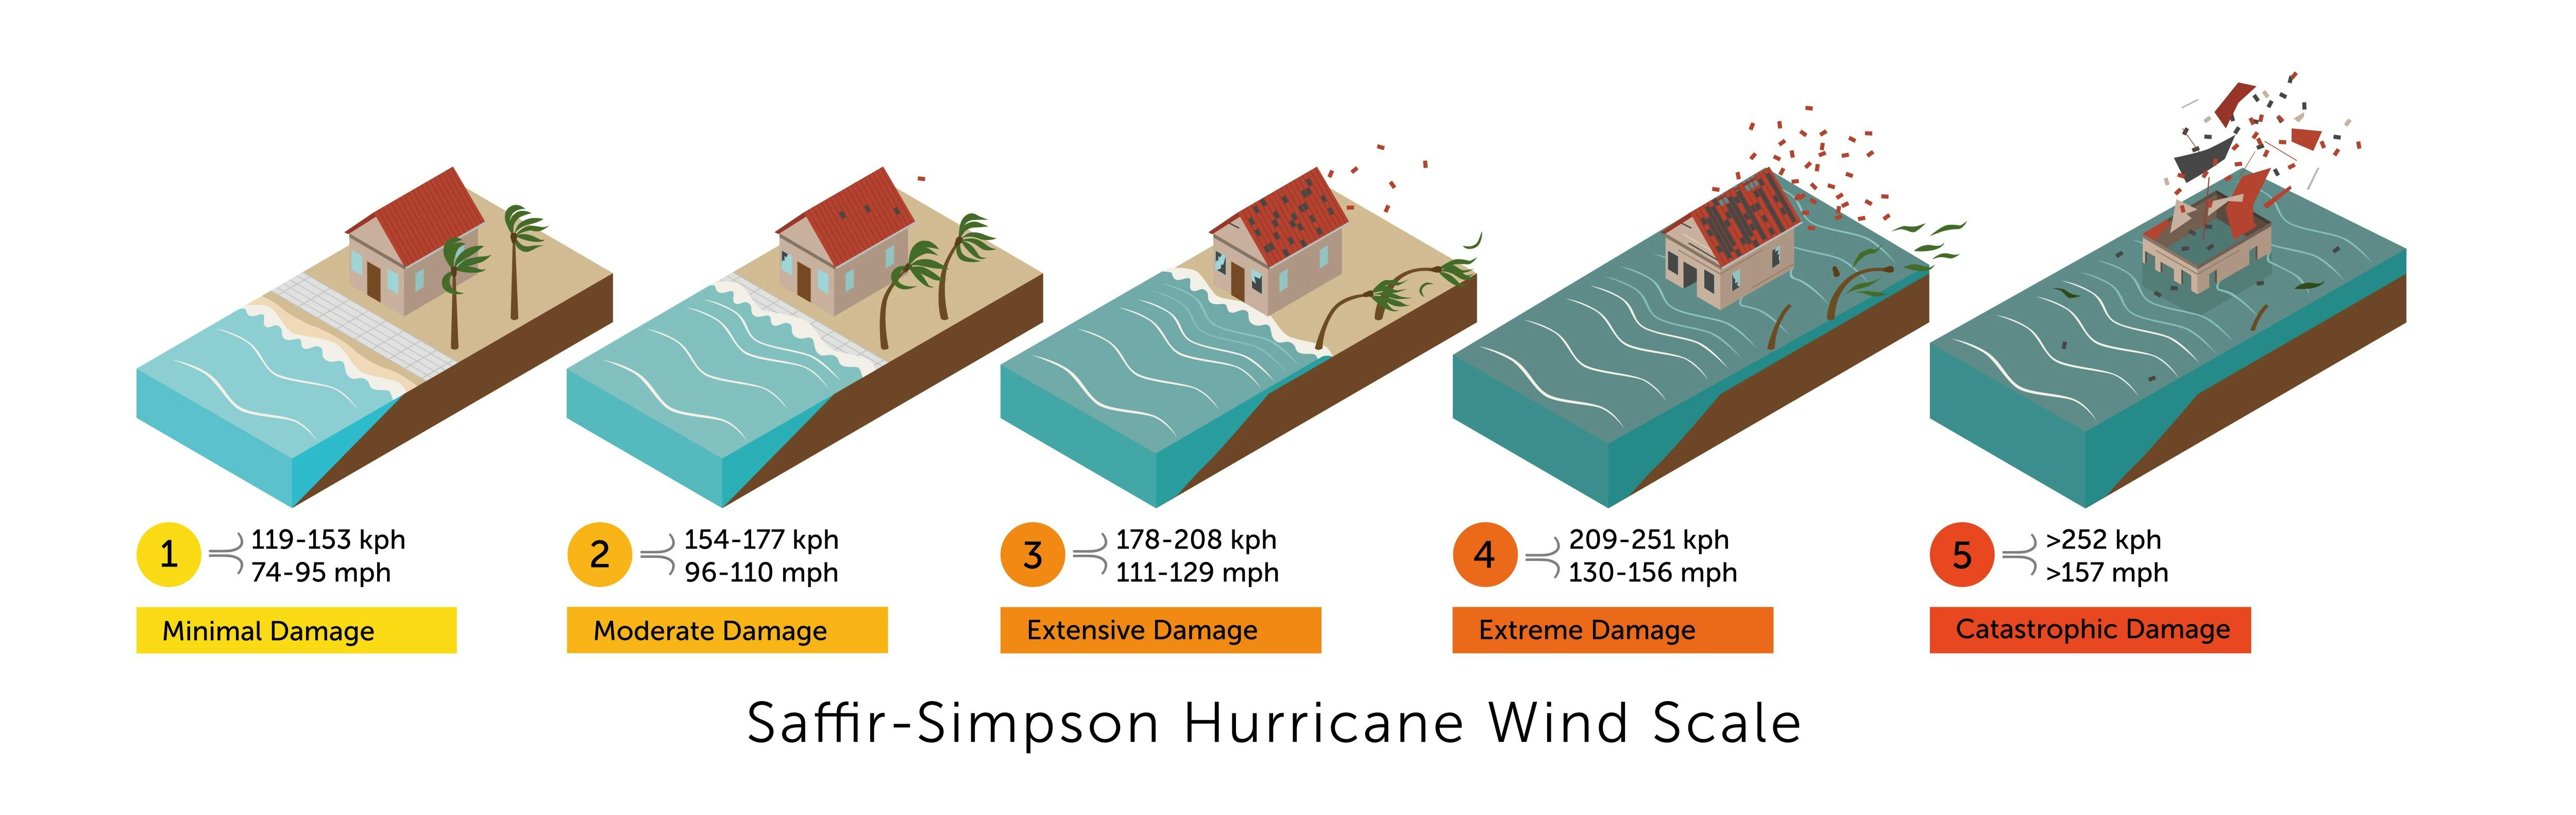 Saffir-Simpsonova stupnice hurikánů